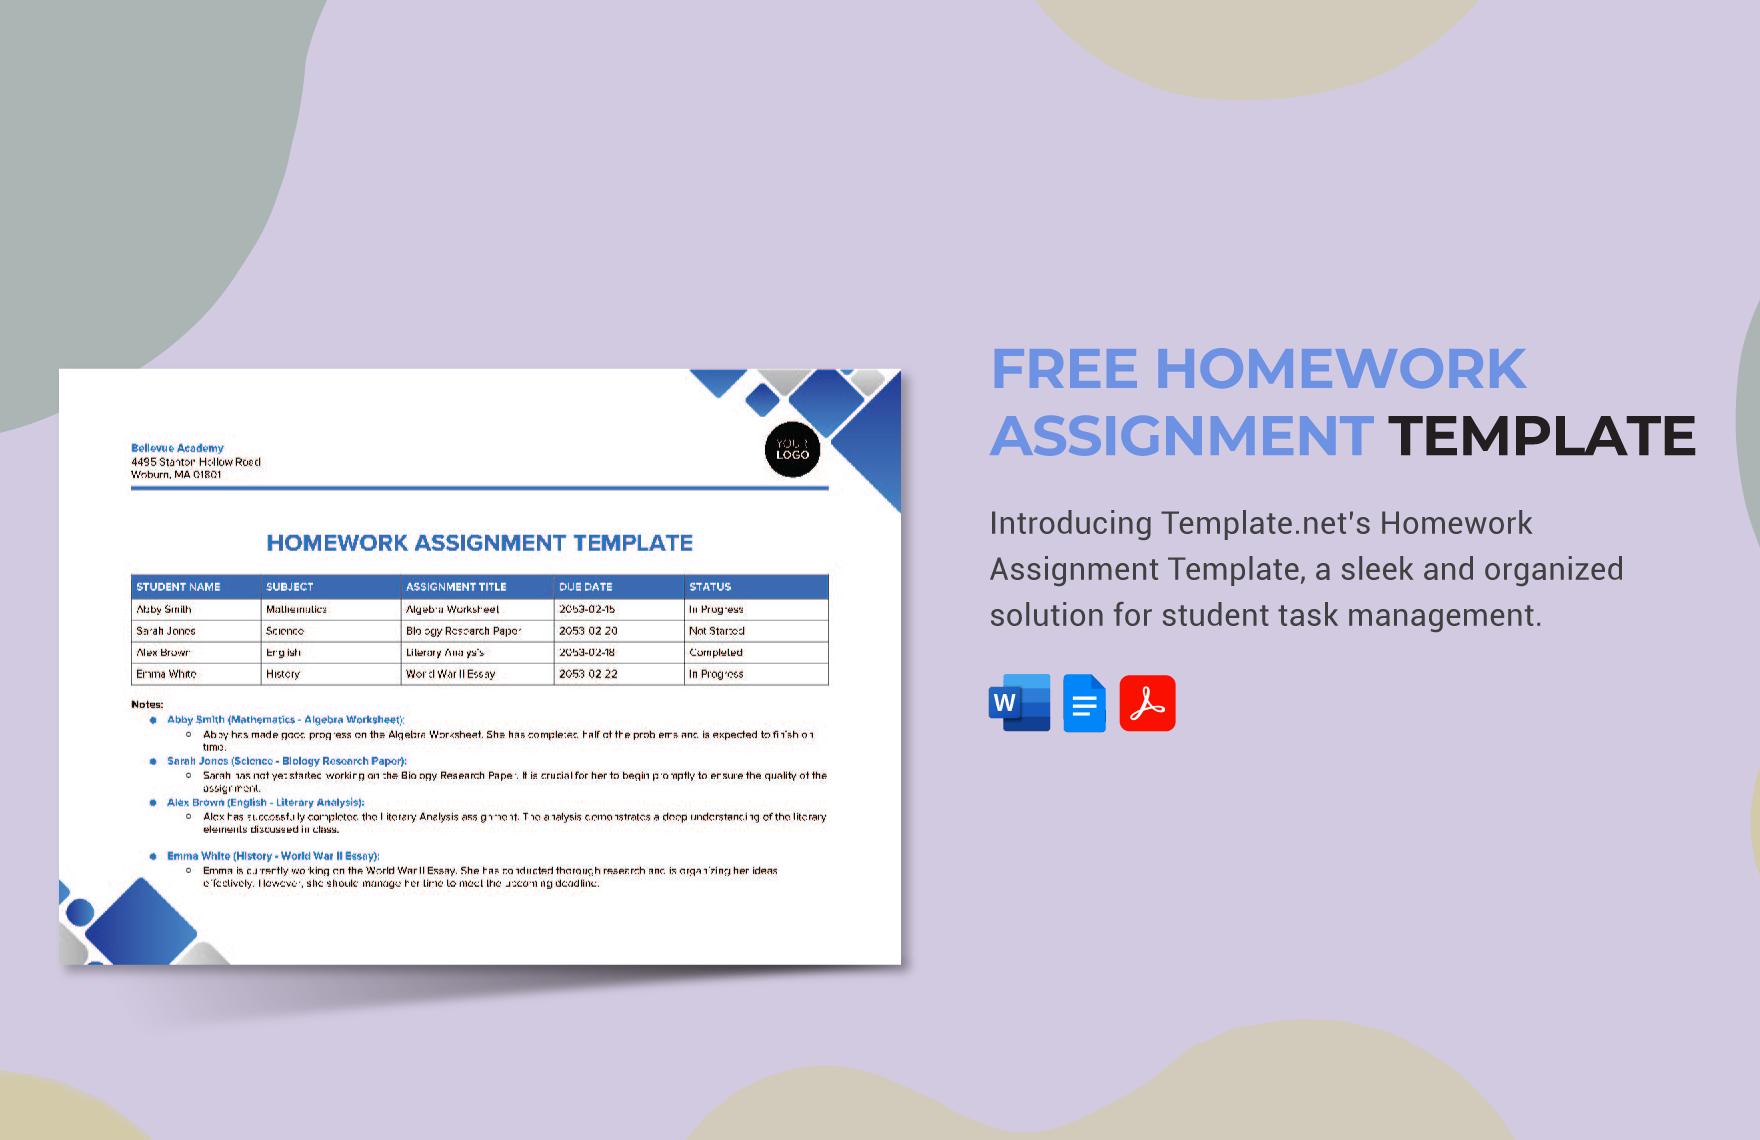 Free Homework Assignment Template